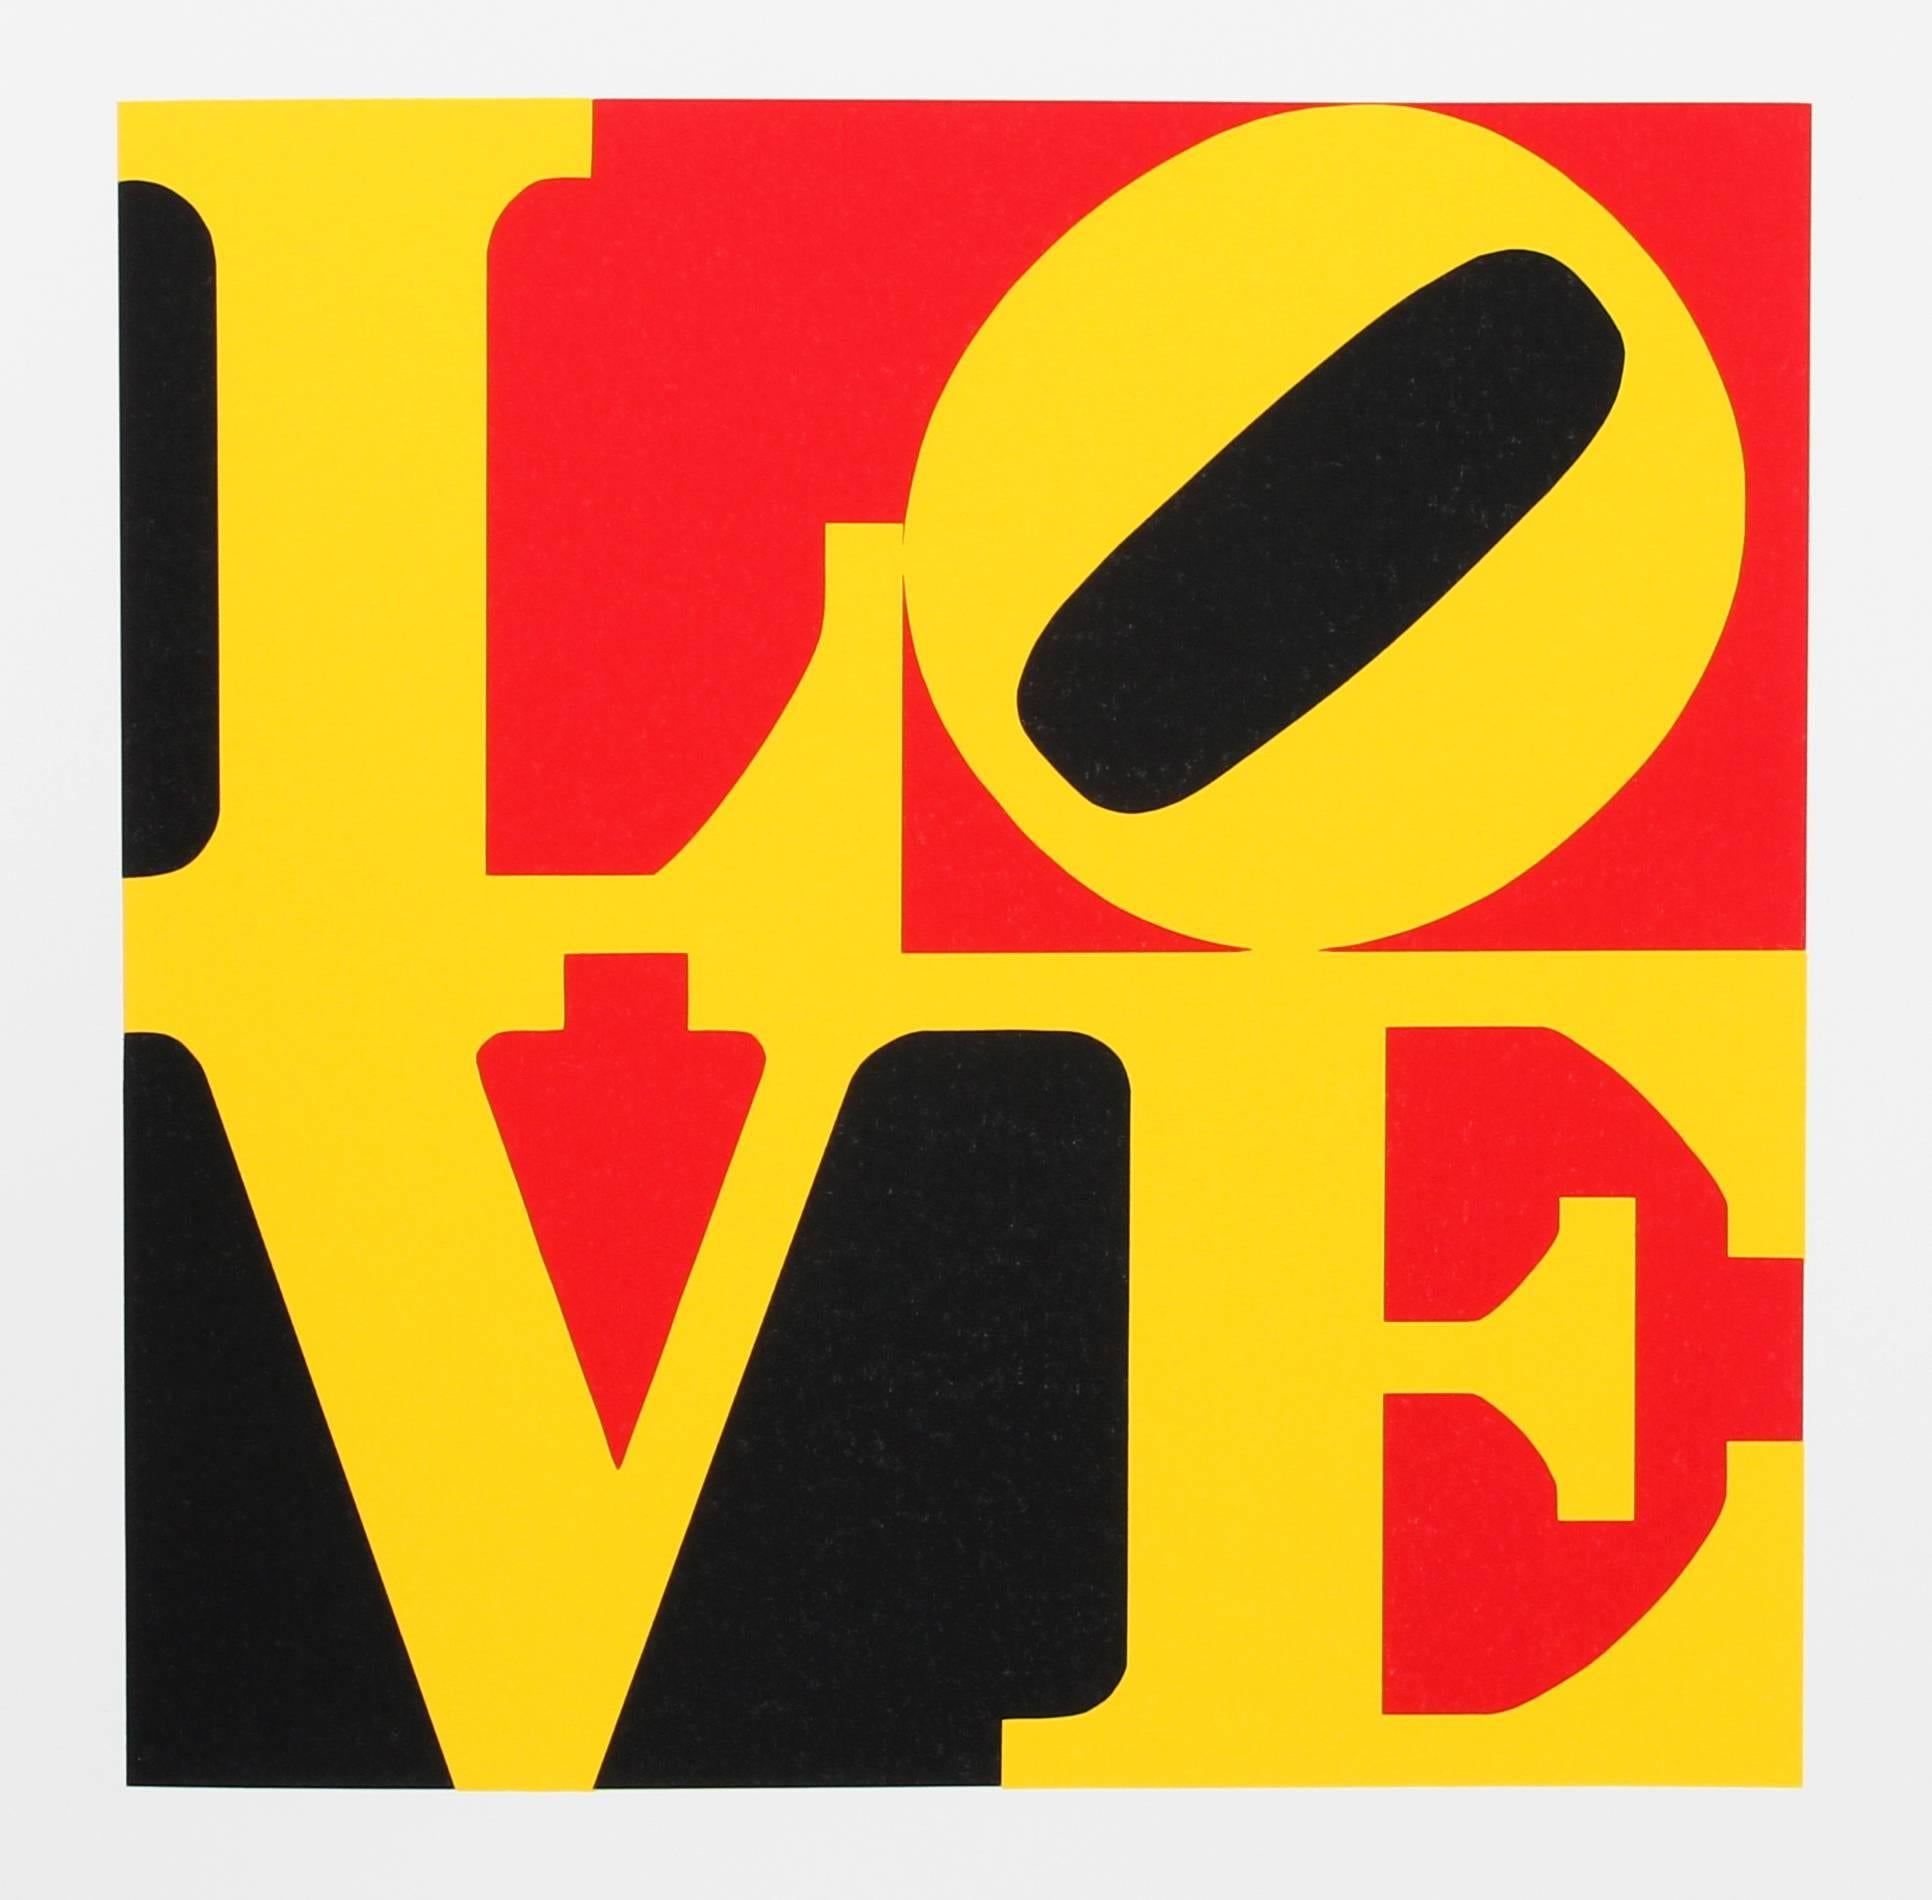 Artist: Robert Indiana, American (1928 - 2018)
Title: Die Deutsche Liebe (The German LOVE) from the American Dream Portfolio
Year: 1968 (1997)
Medium: Serigraph
Edition Size: 395
Image Size: 14 x 14 inches
Size: 22 in. x 17 in. (55.88 cm x 43.18